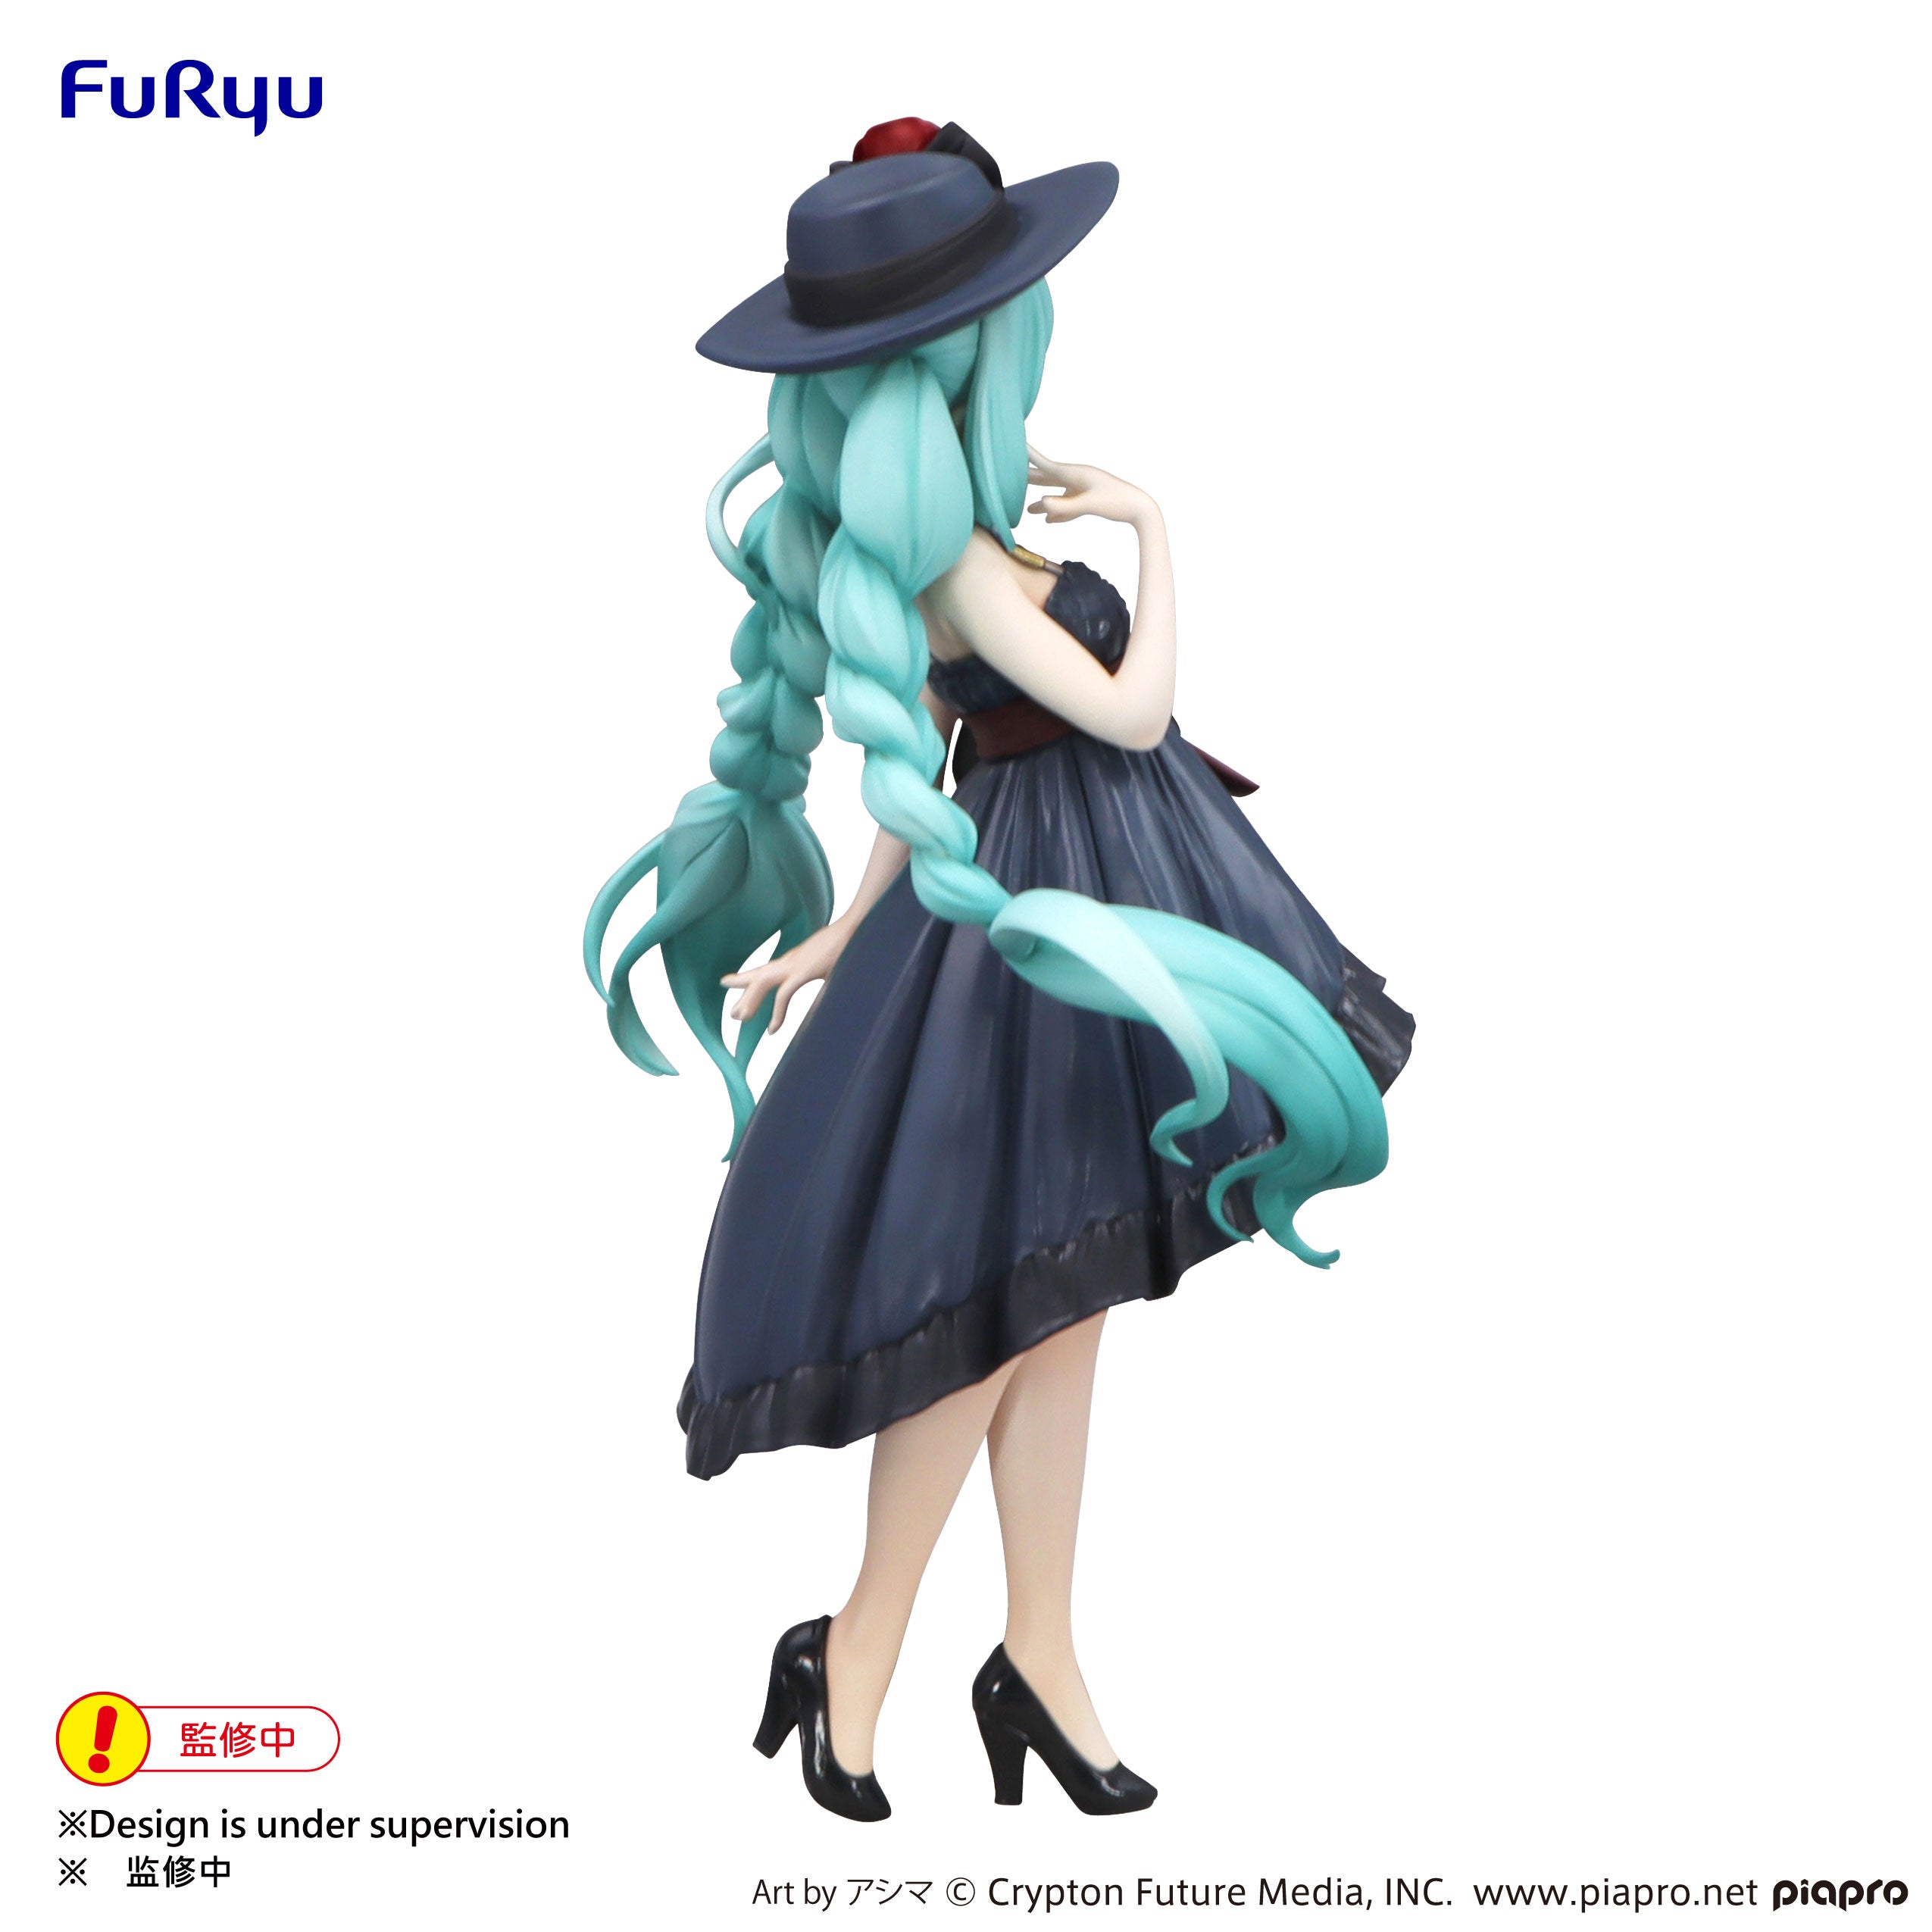 Furyu Figures Trio Try It: Hatsune Miku - Miku Con Vestido De Cita